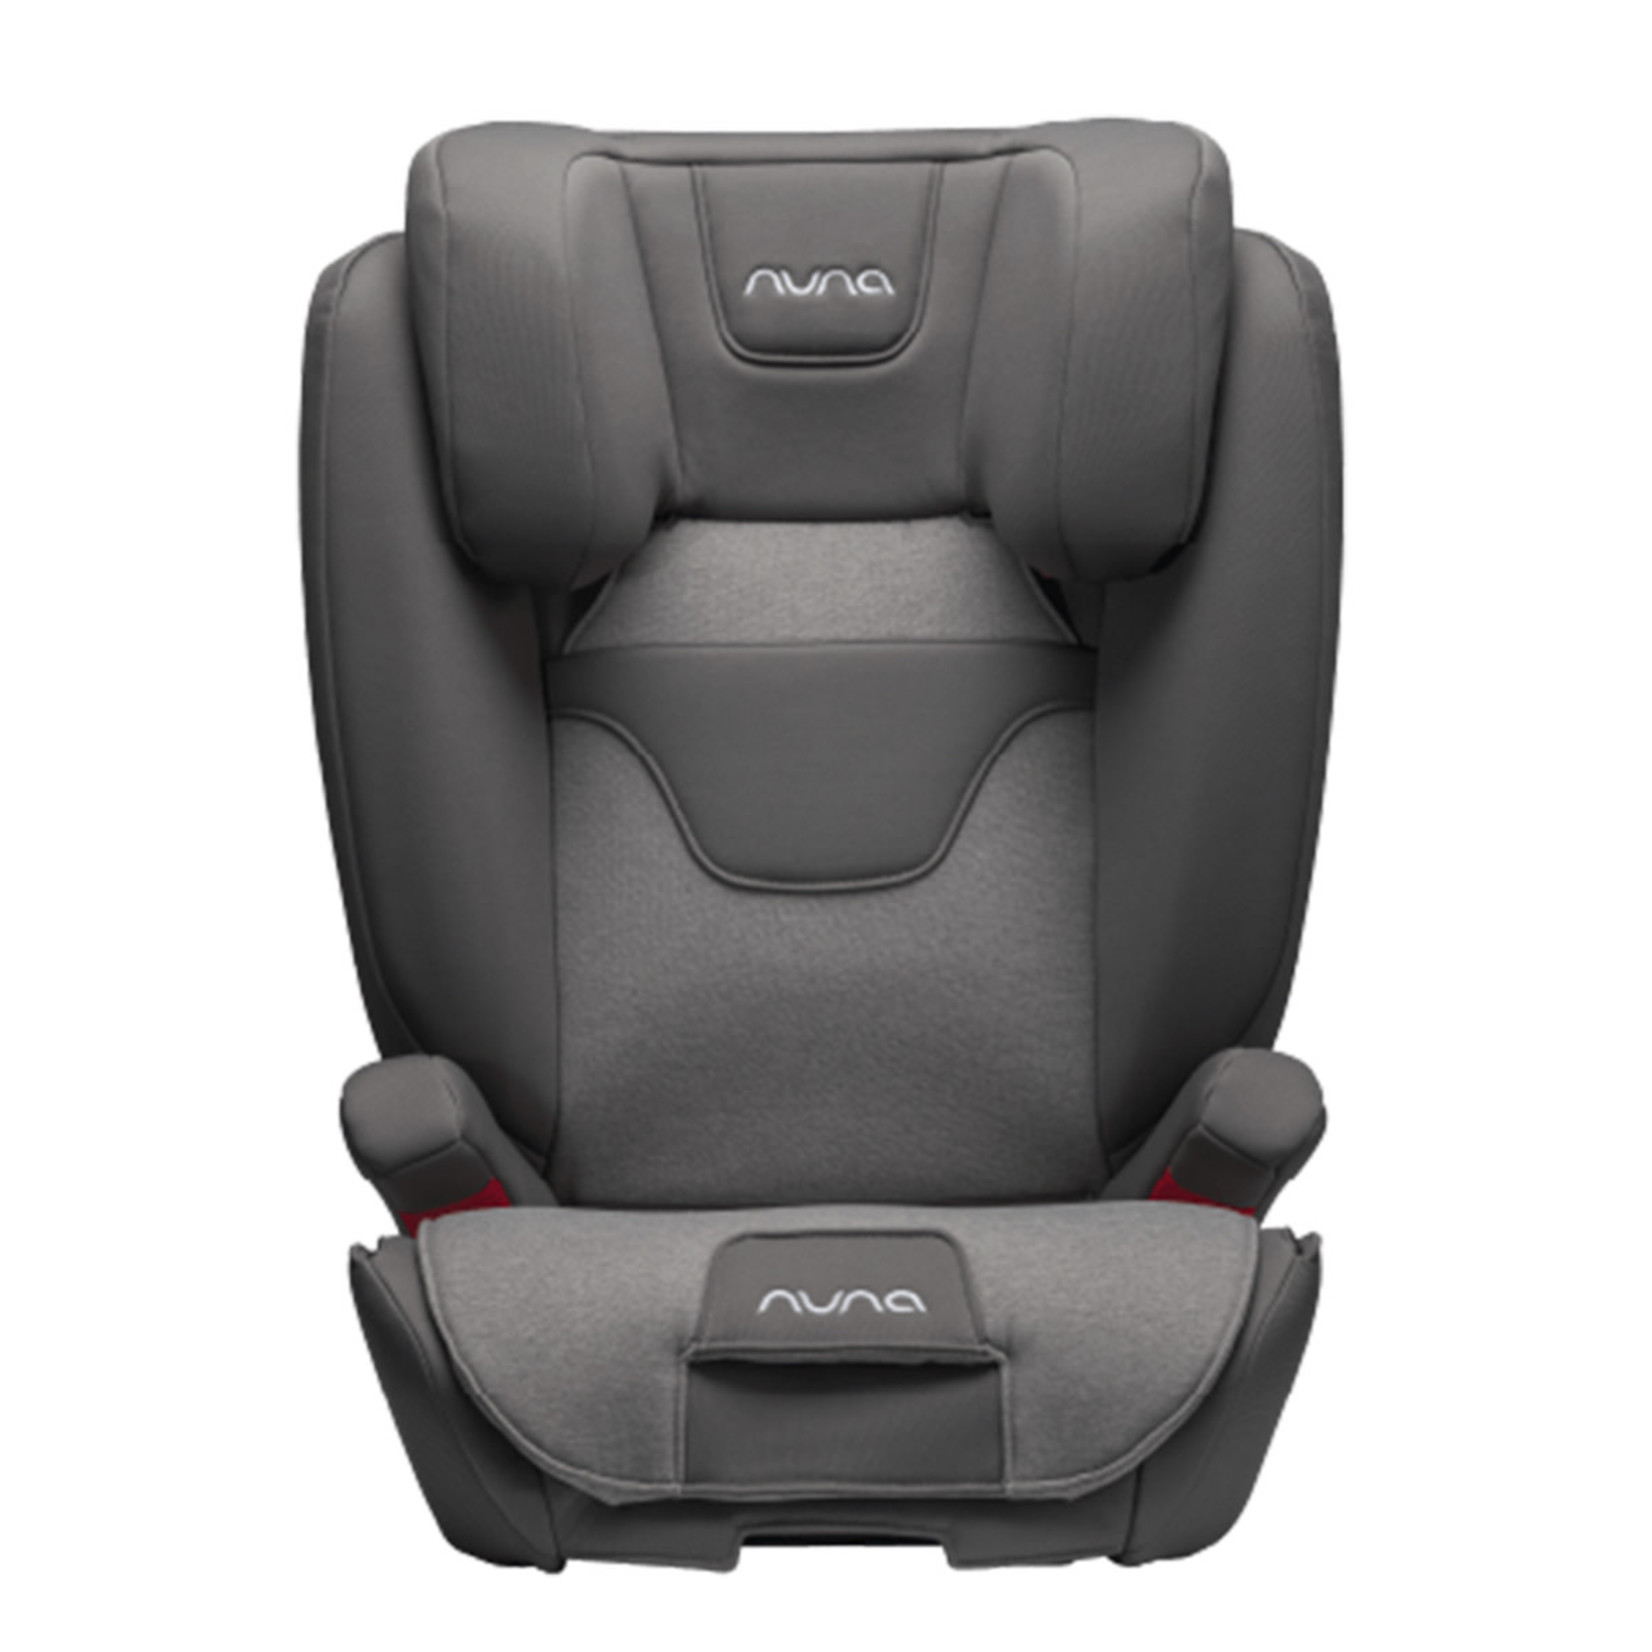 Nuna AACE Booster Seat - Granite